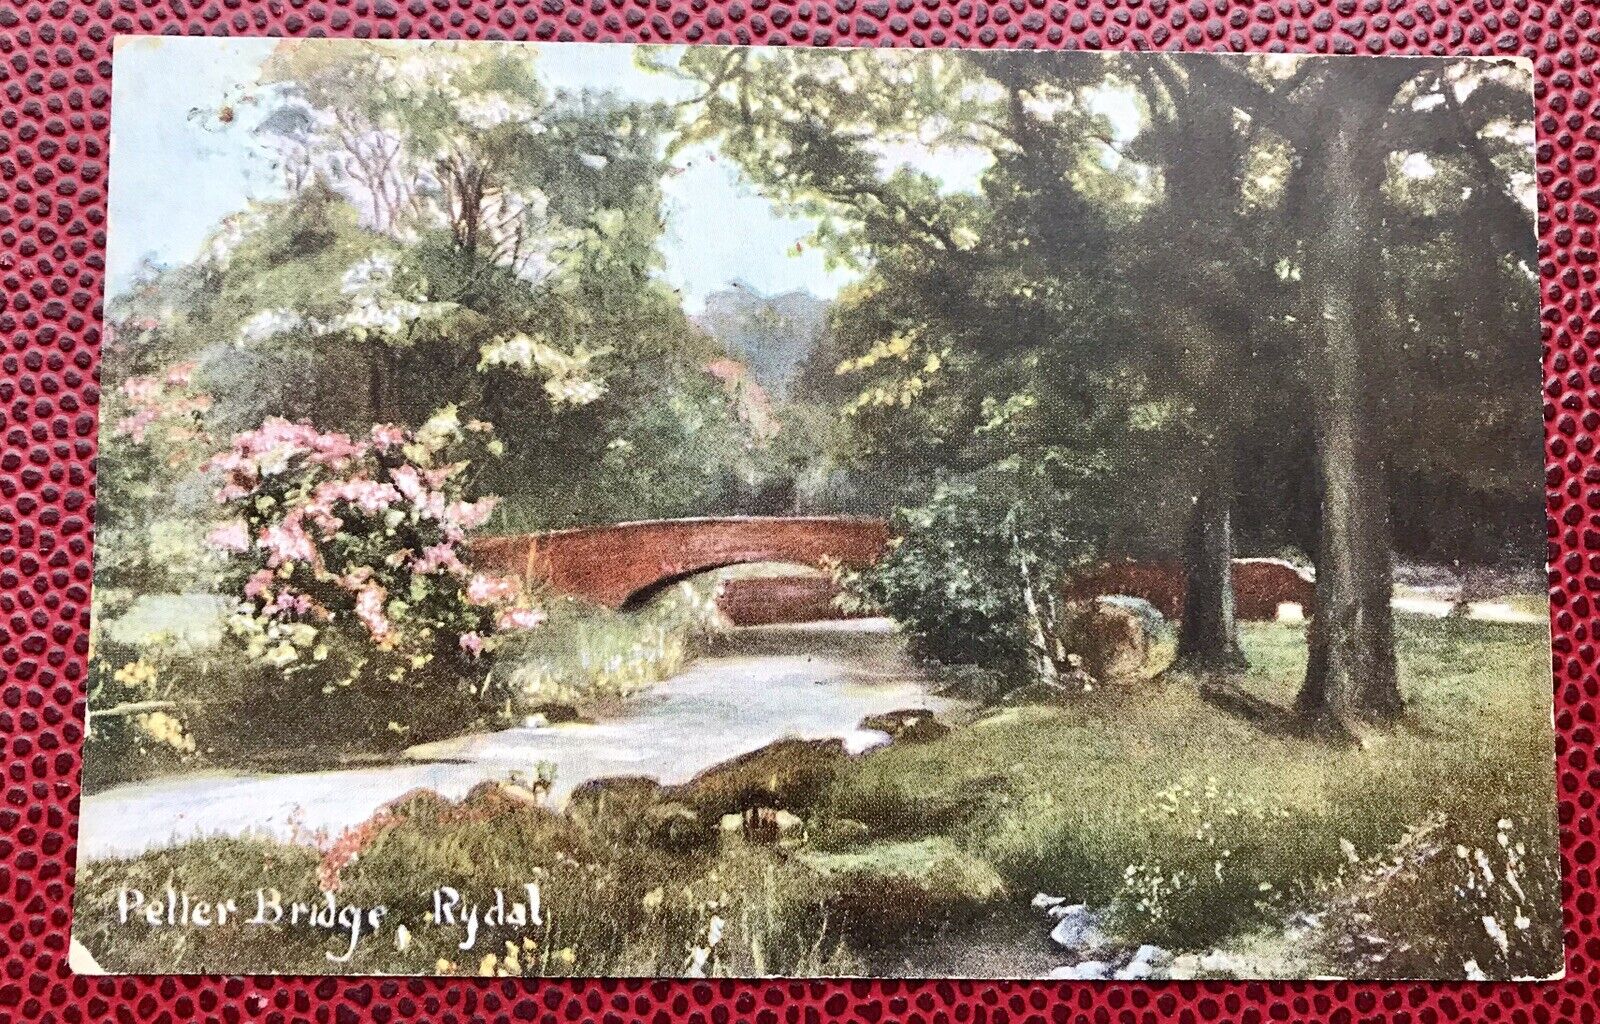 House Clearance - Pellar Bridge Rydal Cumbria Post Card